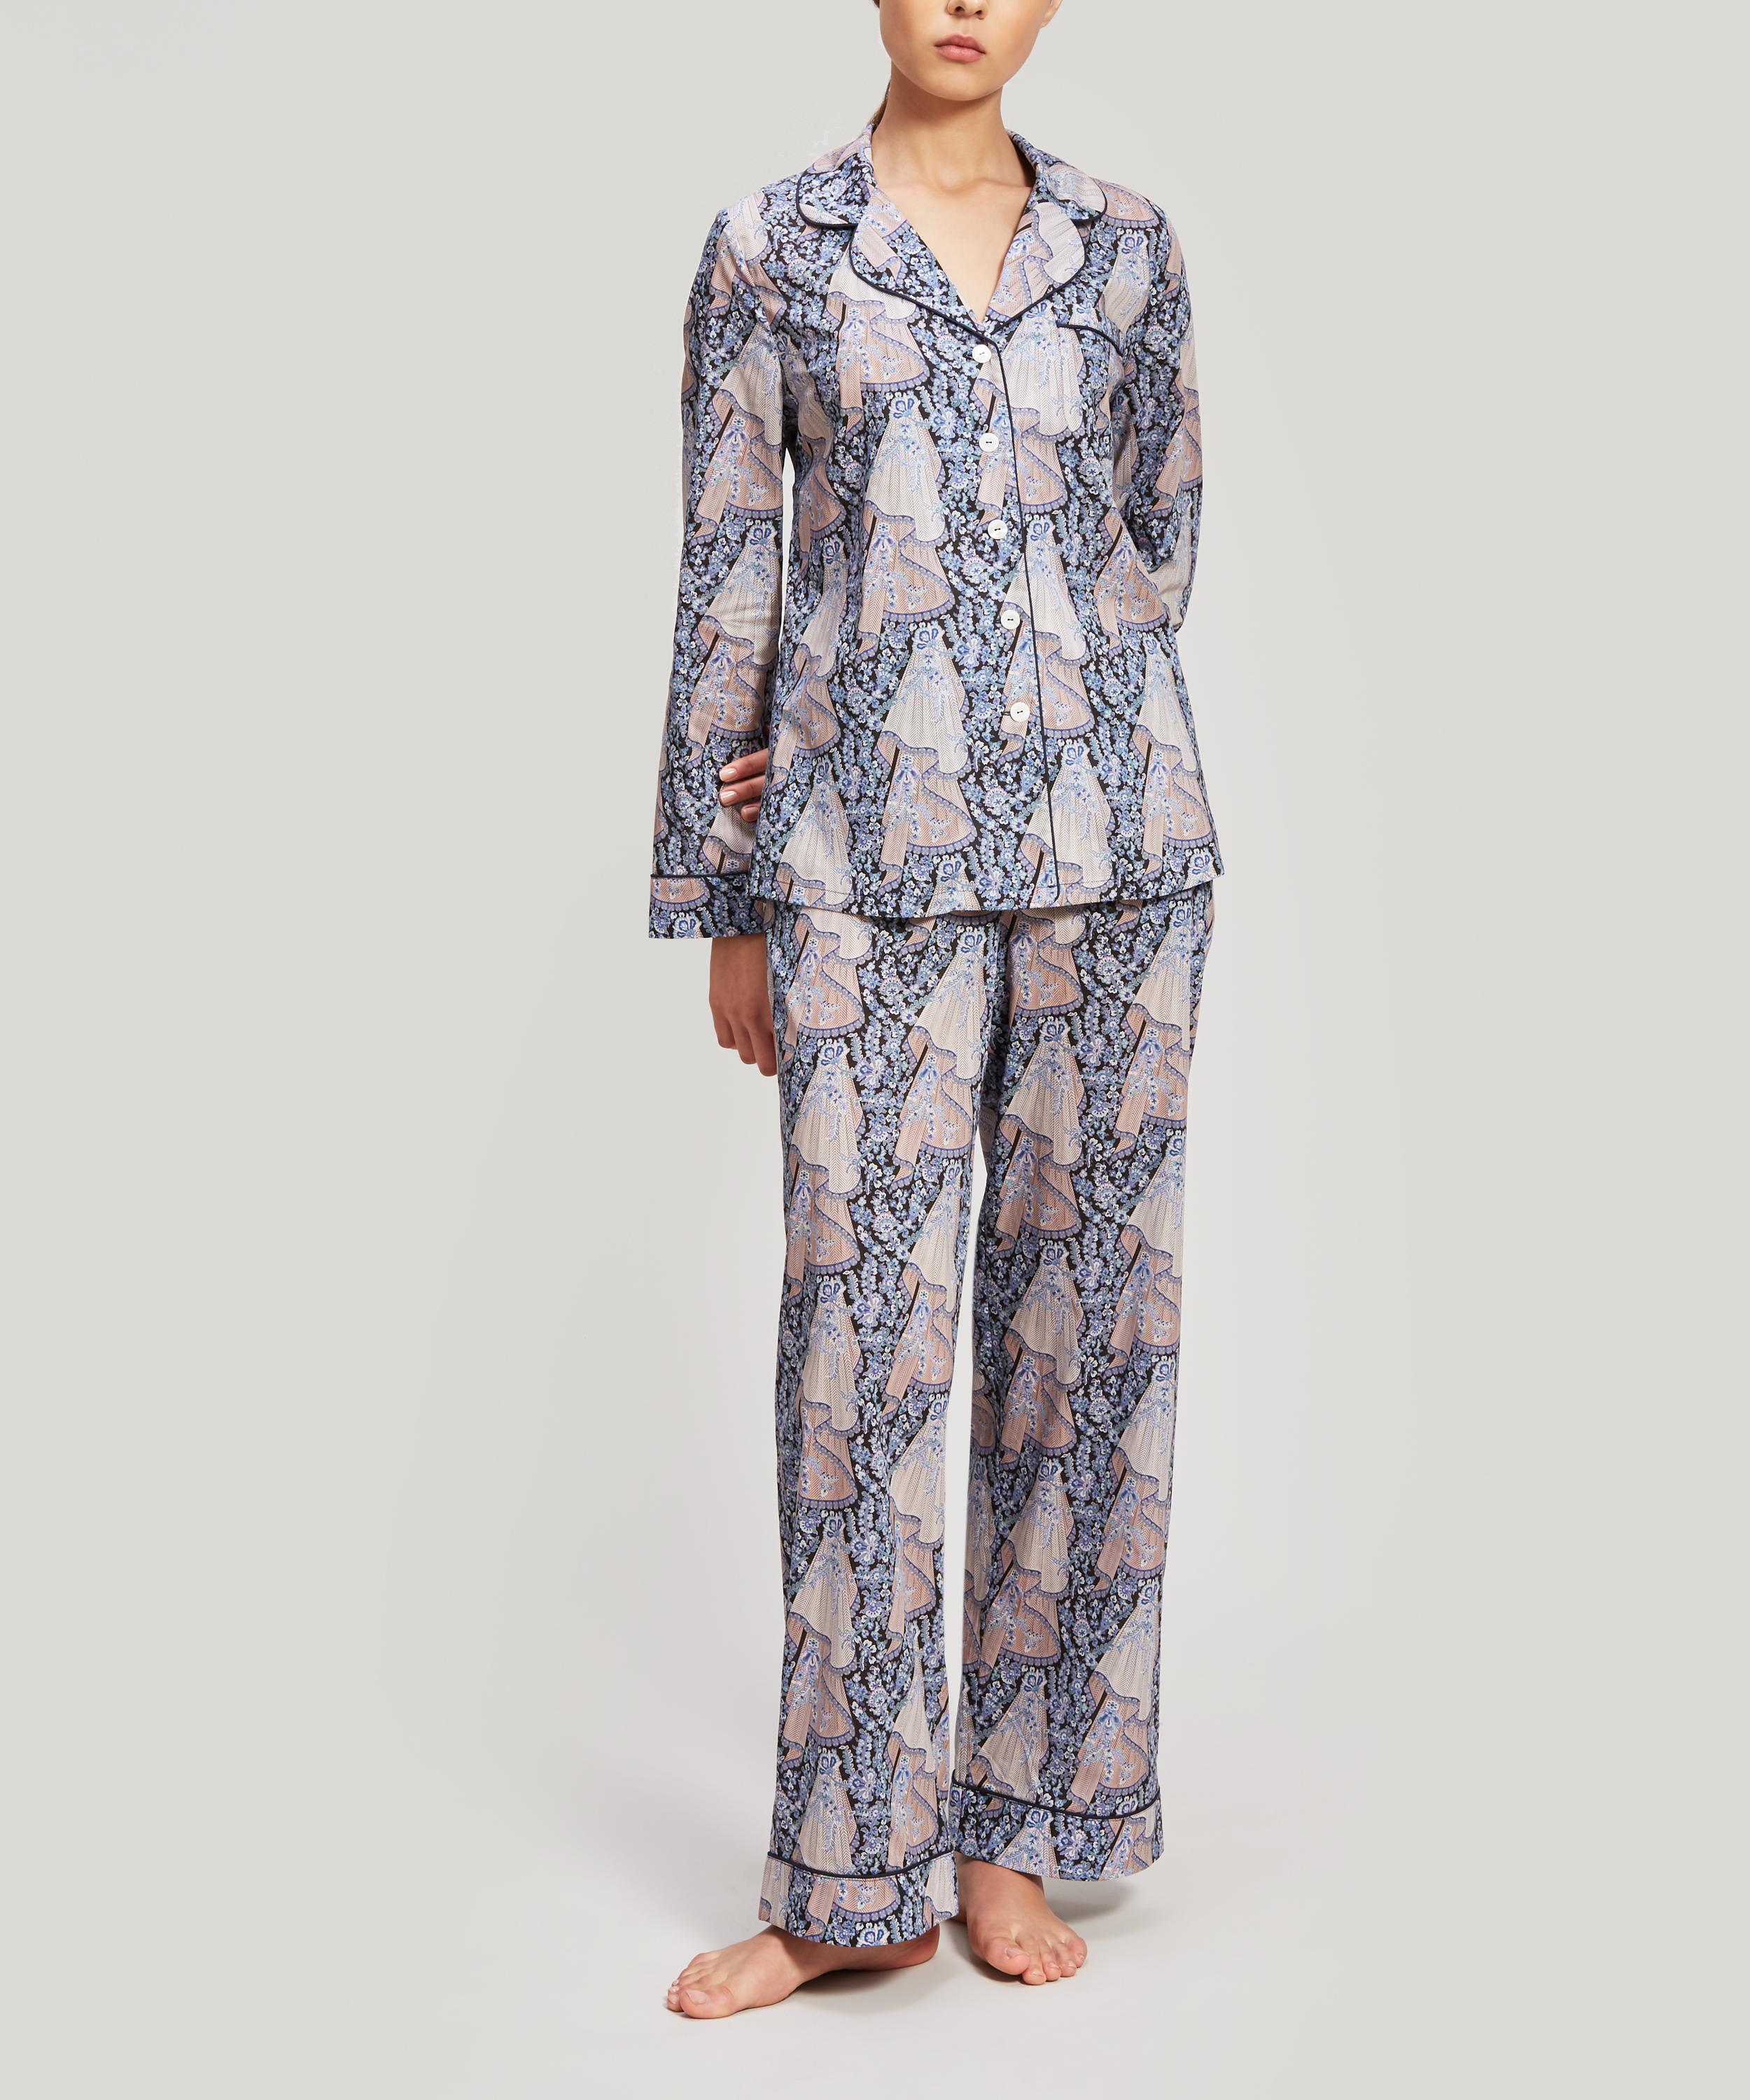 Liberty London Dora Tana Lawn' Cotton Pyjama Set In Blue